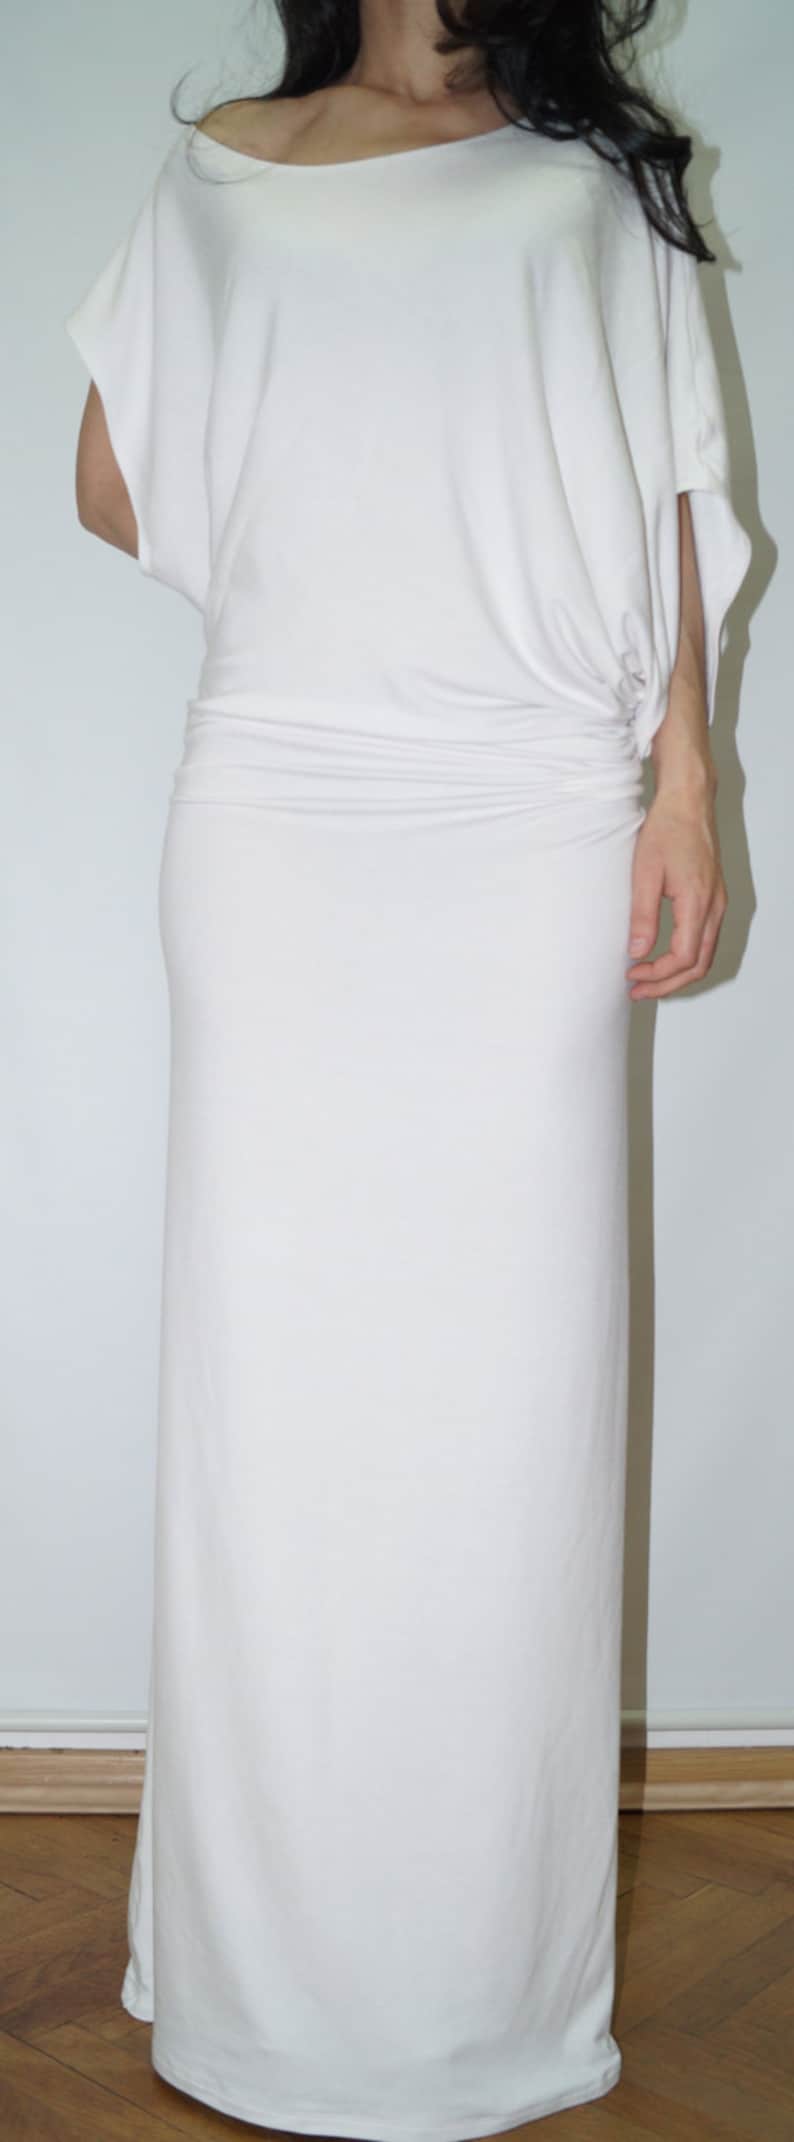 Maxi Dress/Asymmetrical Maxi Tunic/Handmade White Kaftan/White Summer Dress/Top/Cotton Dress/White Tunic/White Dress/White Casual Top/F1114 image 4